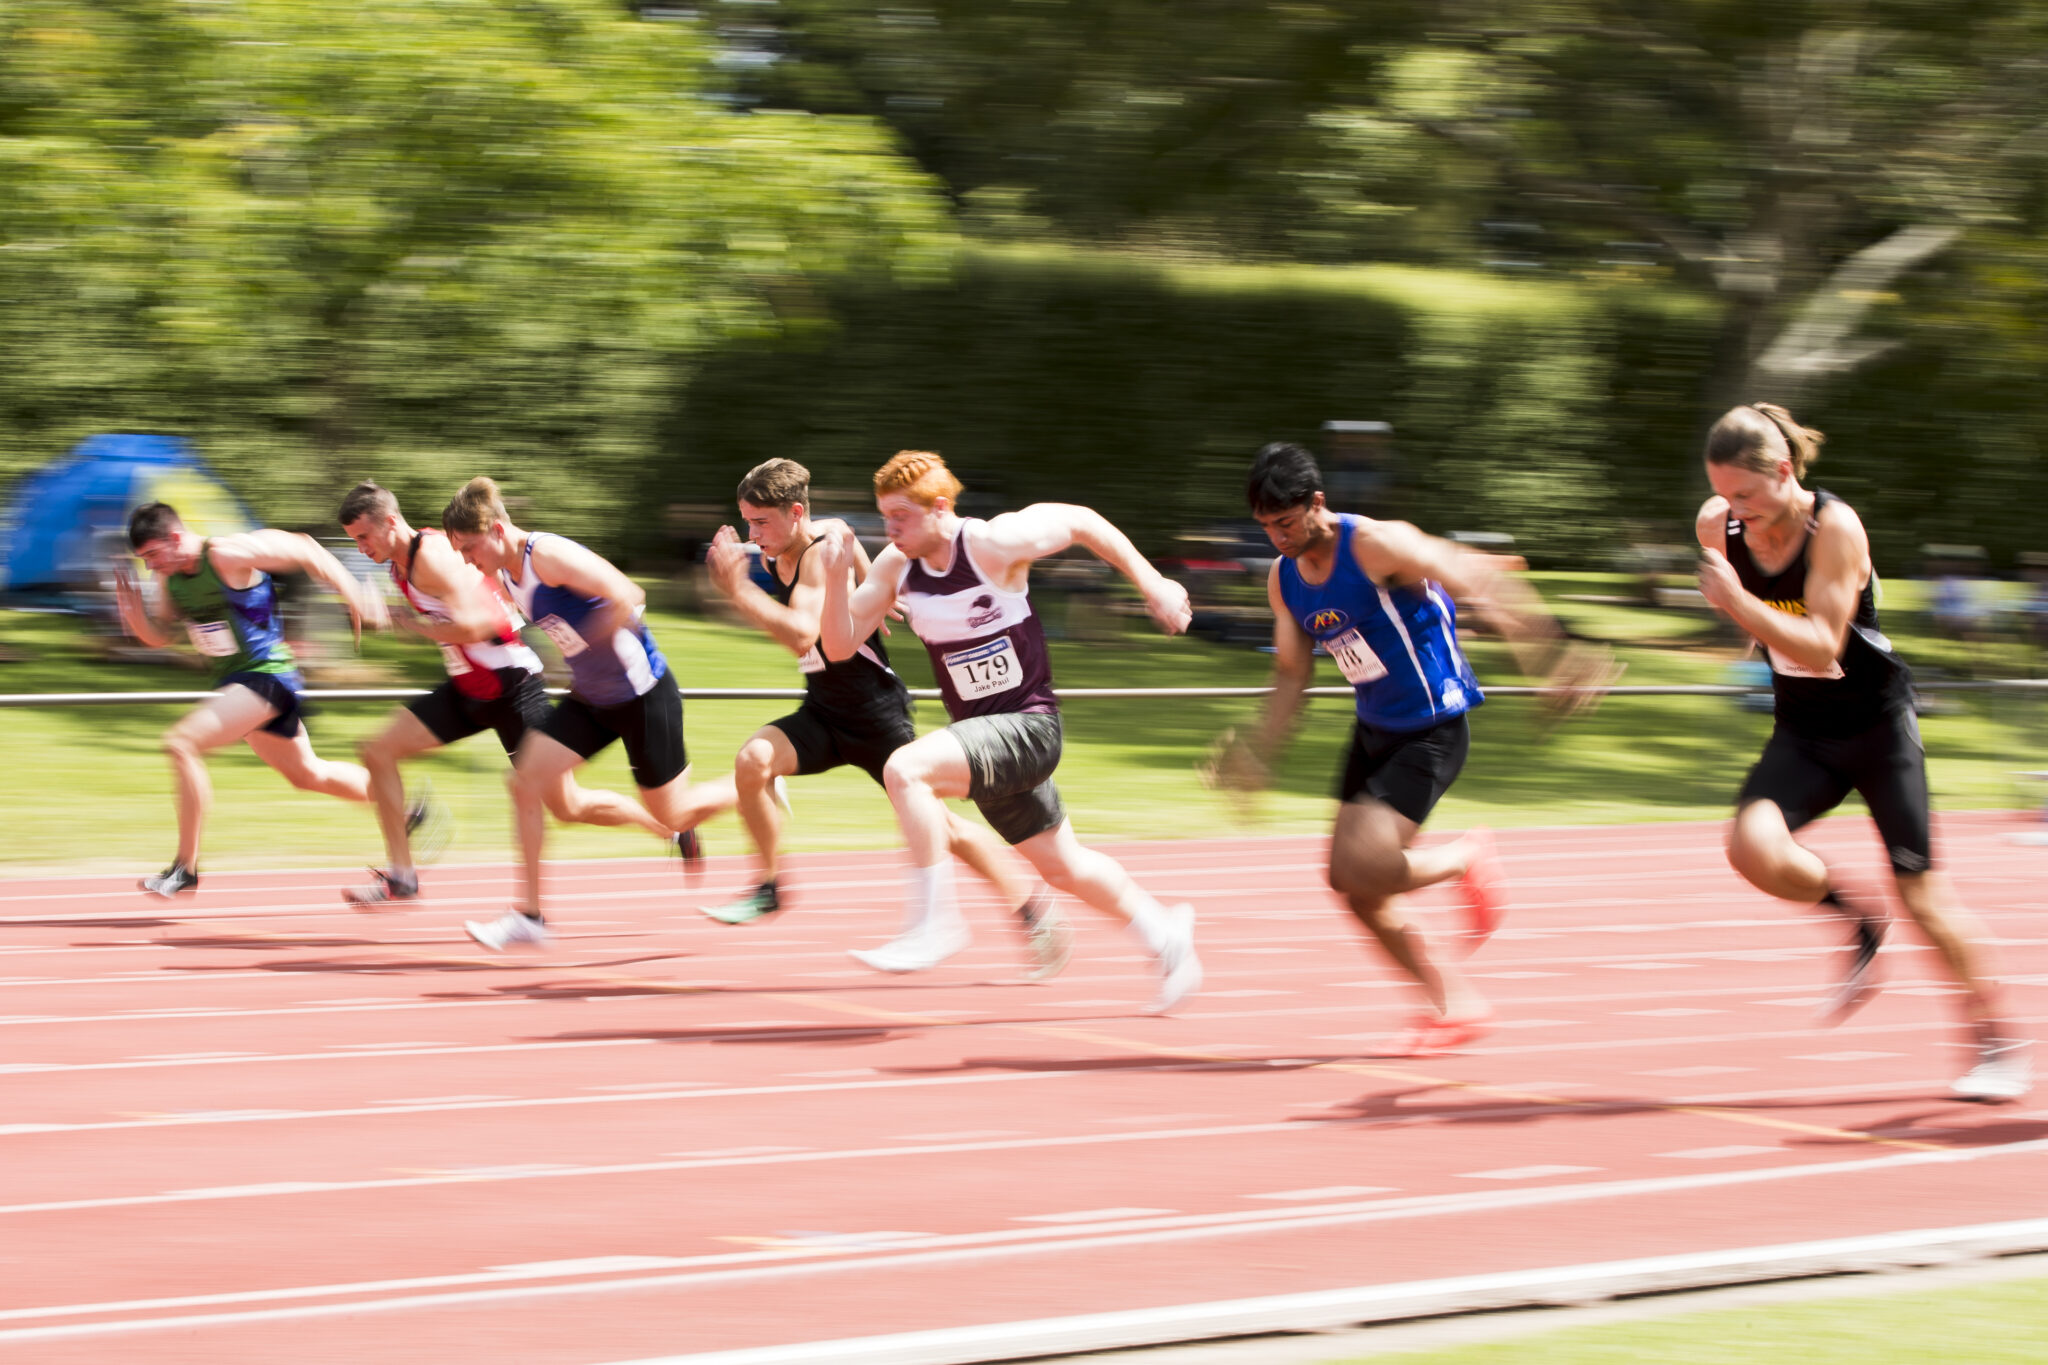 Athletics under the Covid-19 Protection Framework - Athletics New Zealand